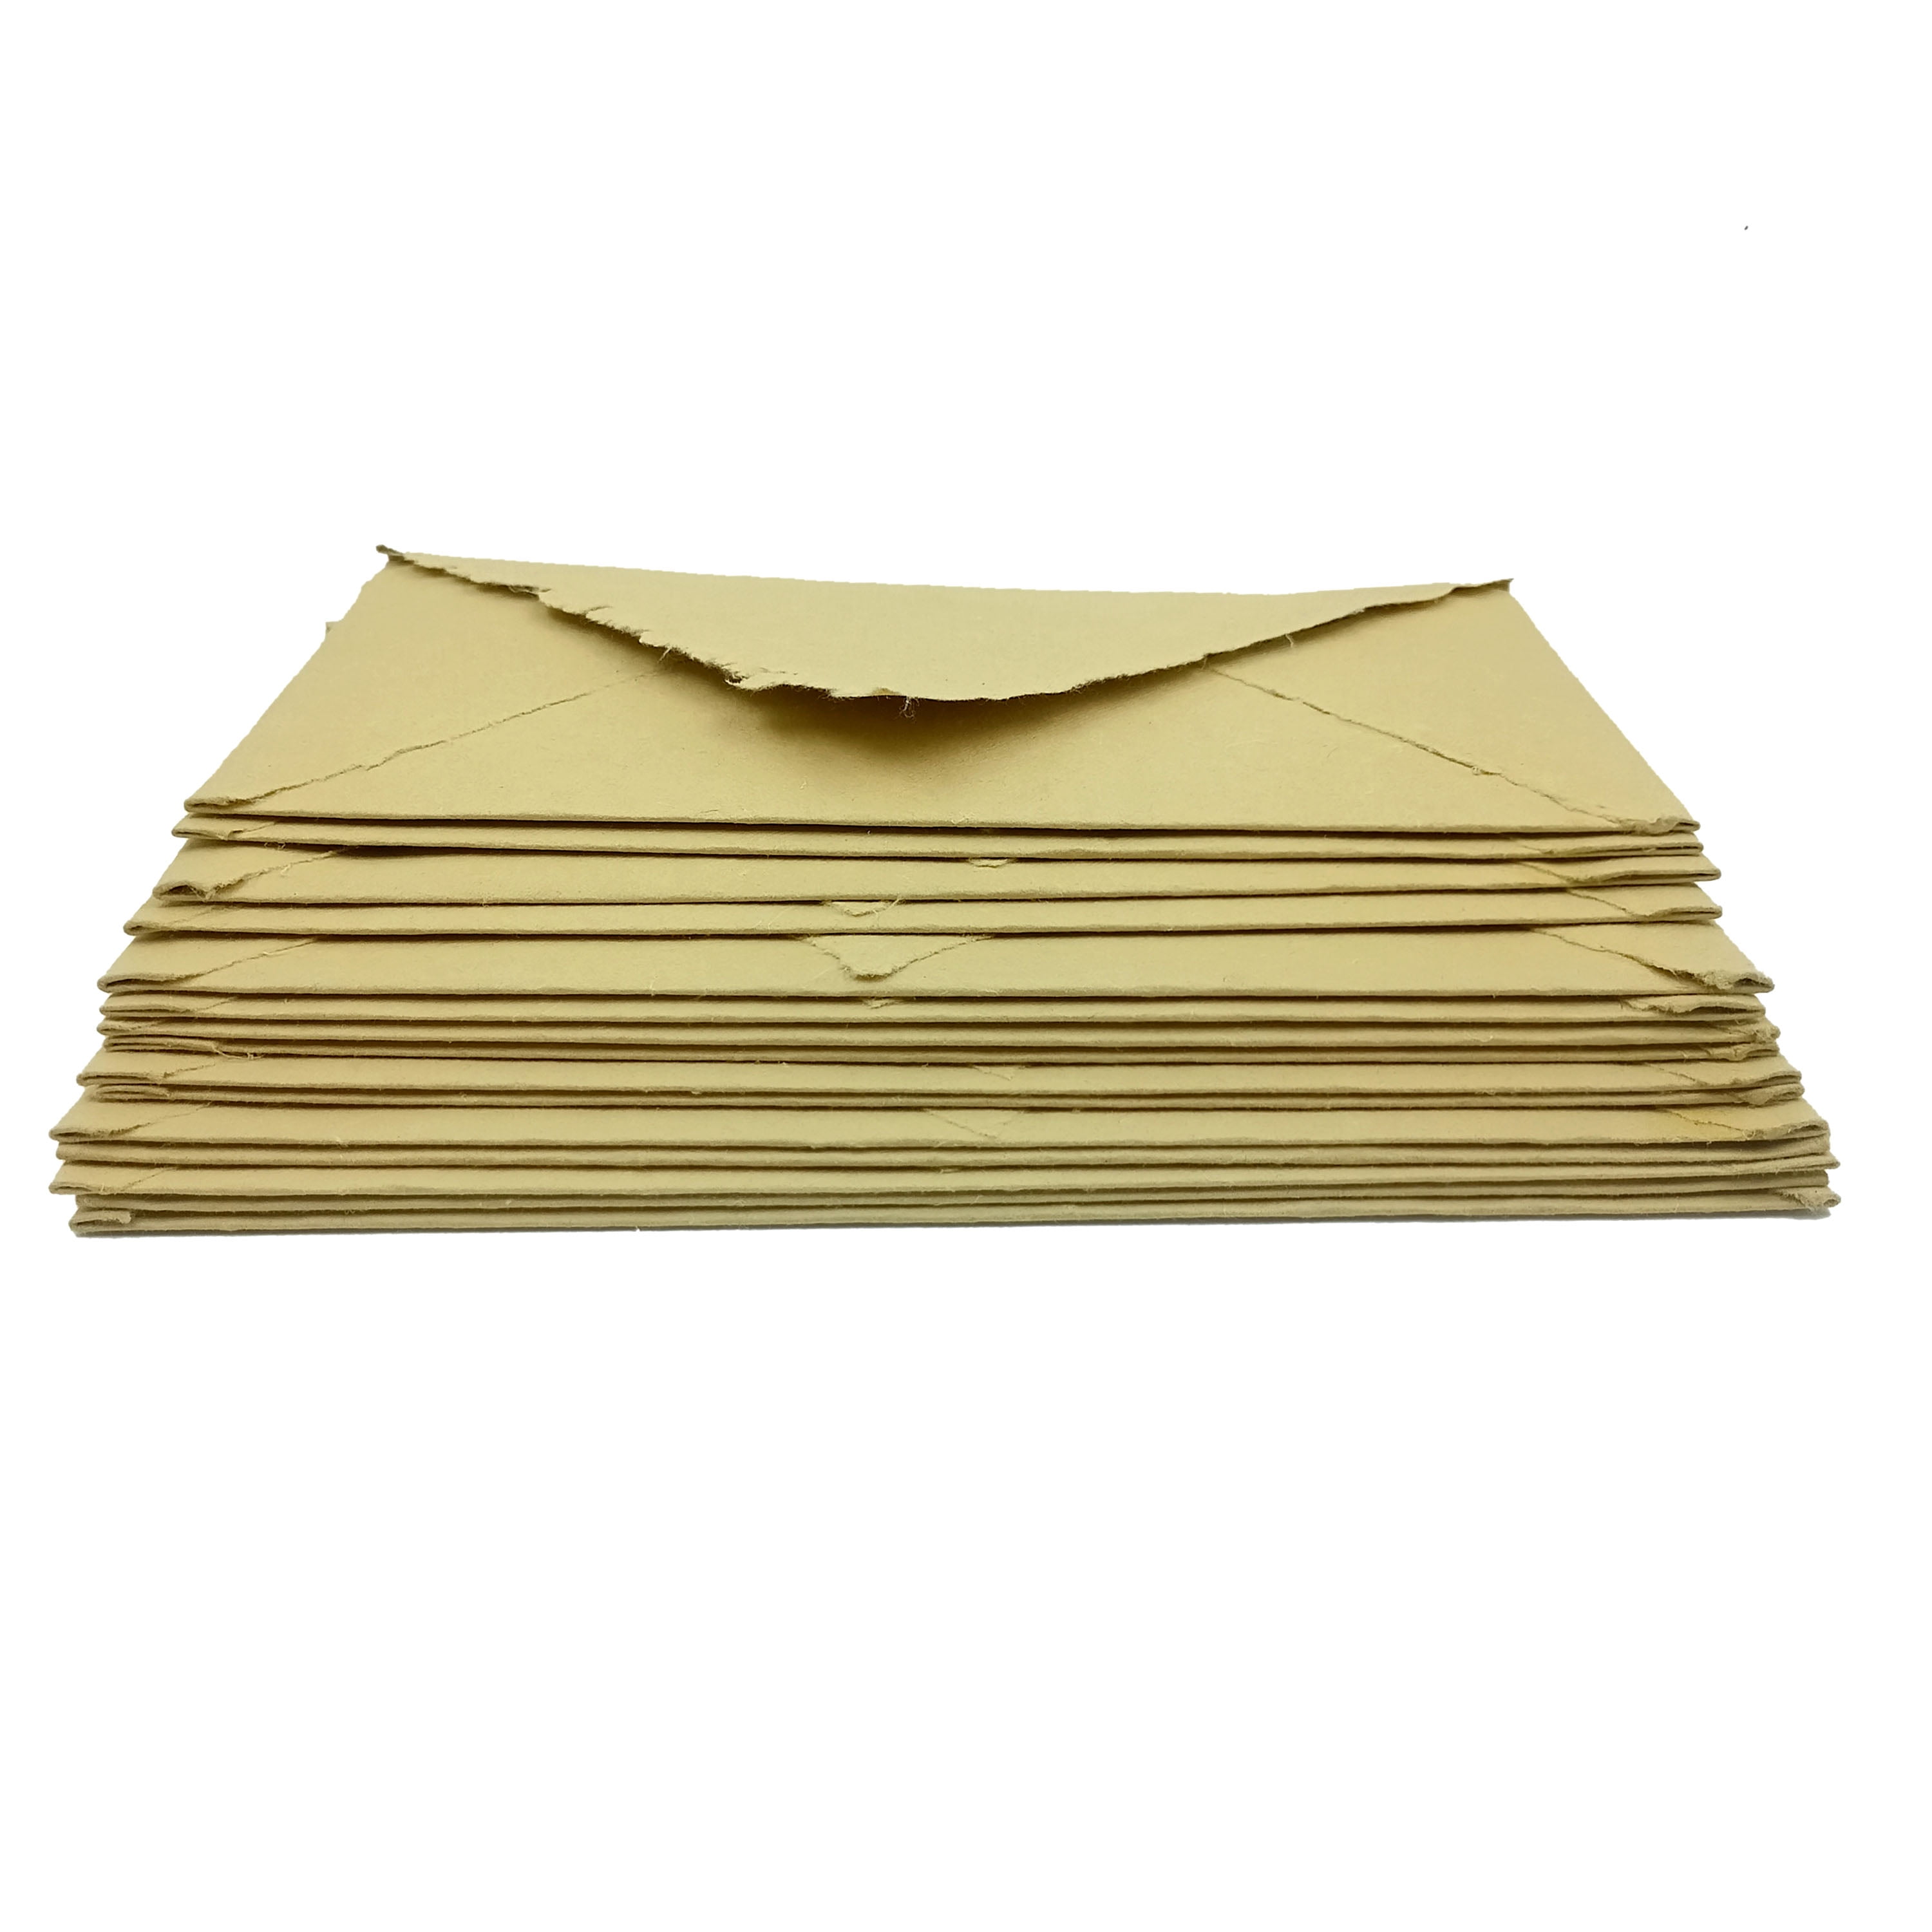 Khadi Paper White Rag (20 Sheets) Packs A4W 150 GSM 8.25 x 11.75